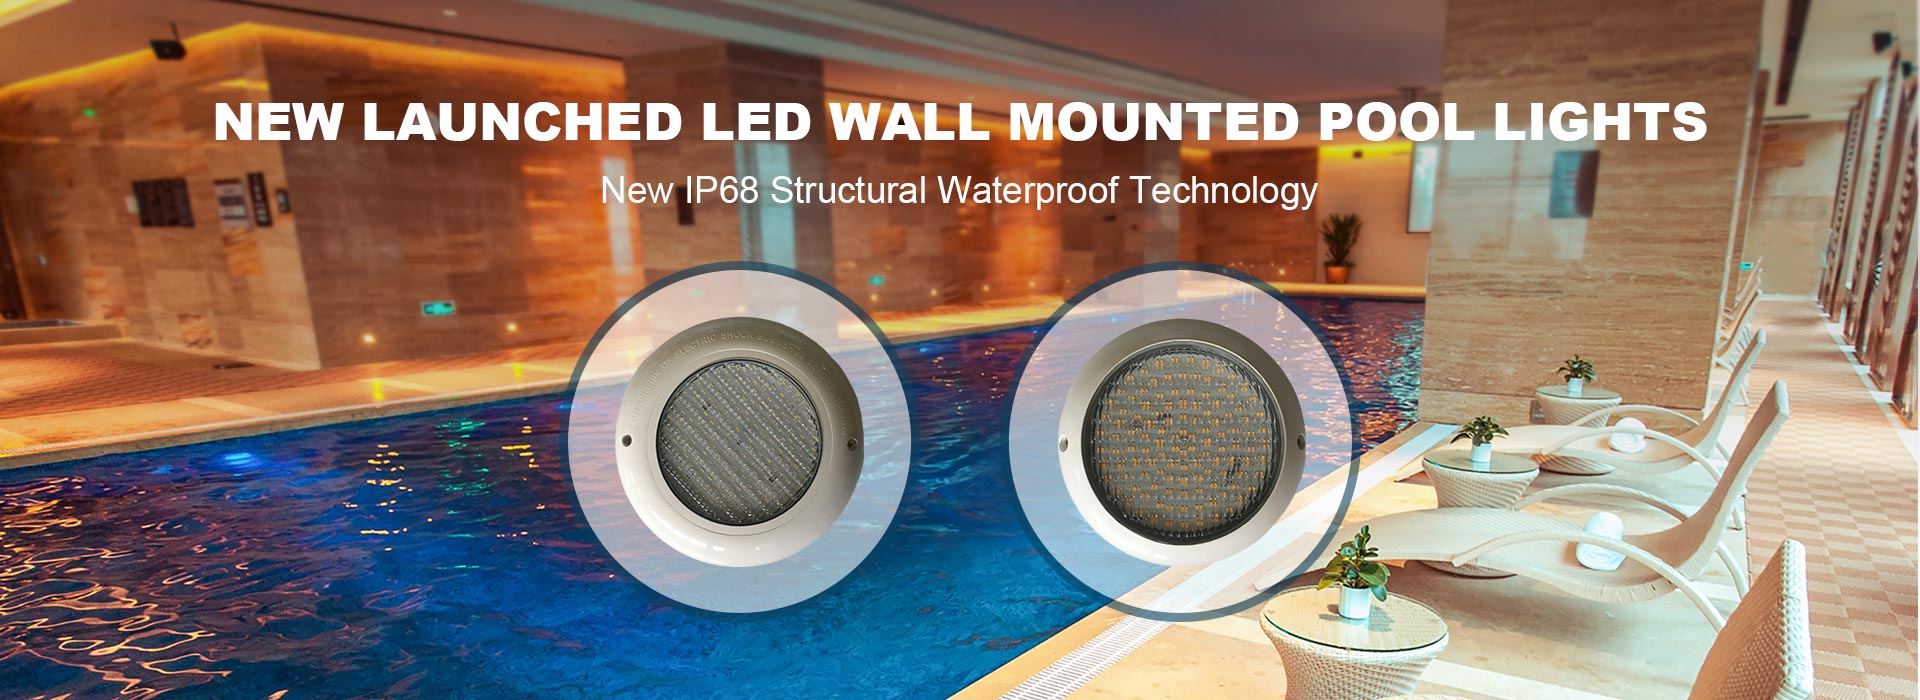 Wall Mounted LED Pool Light